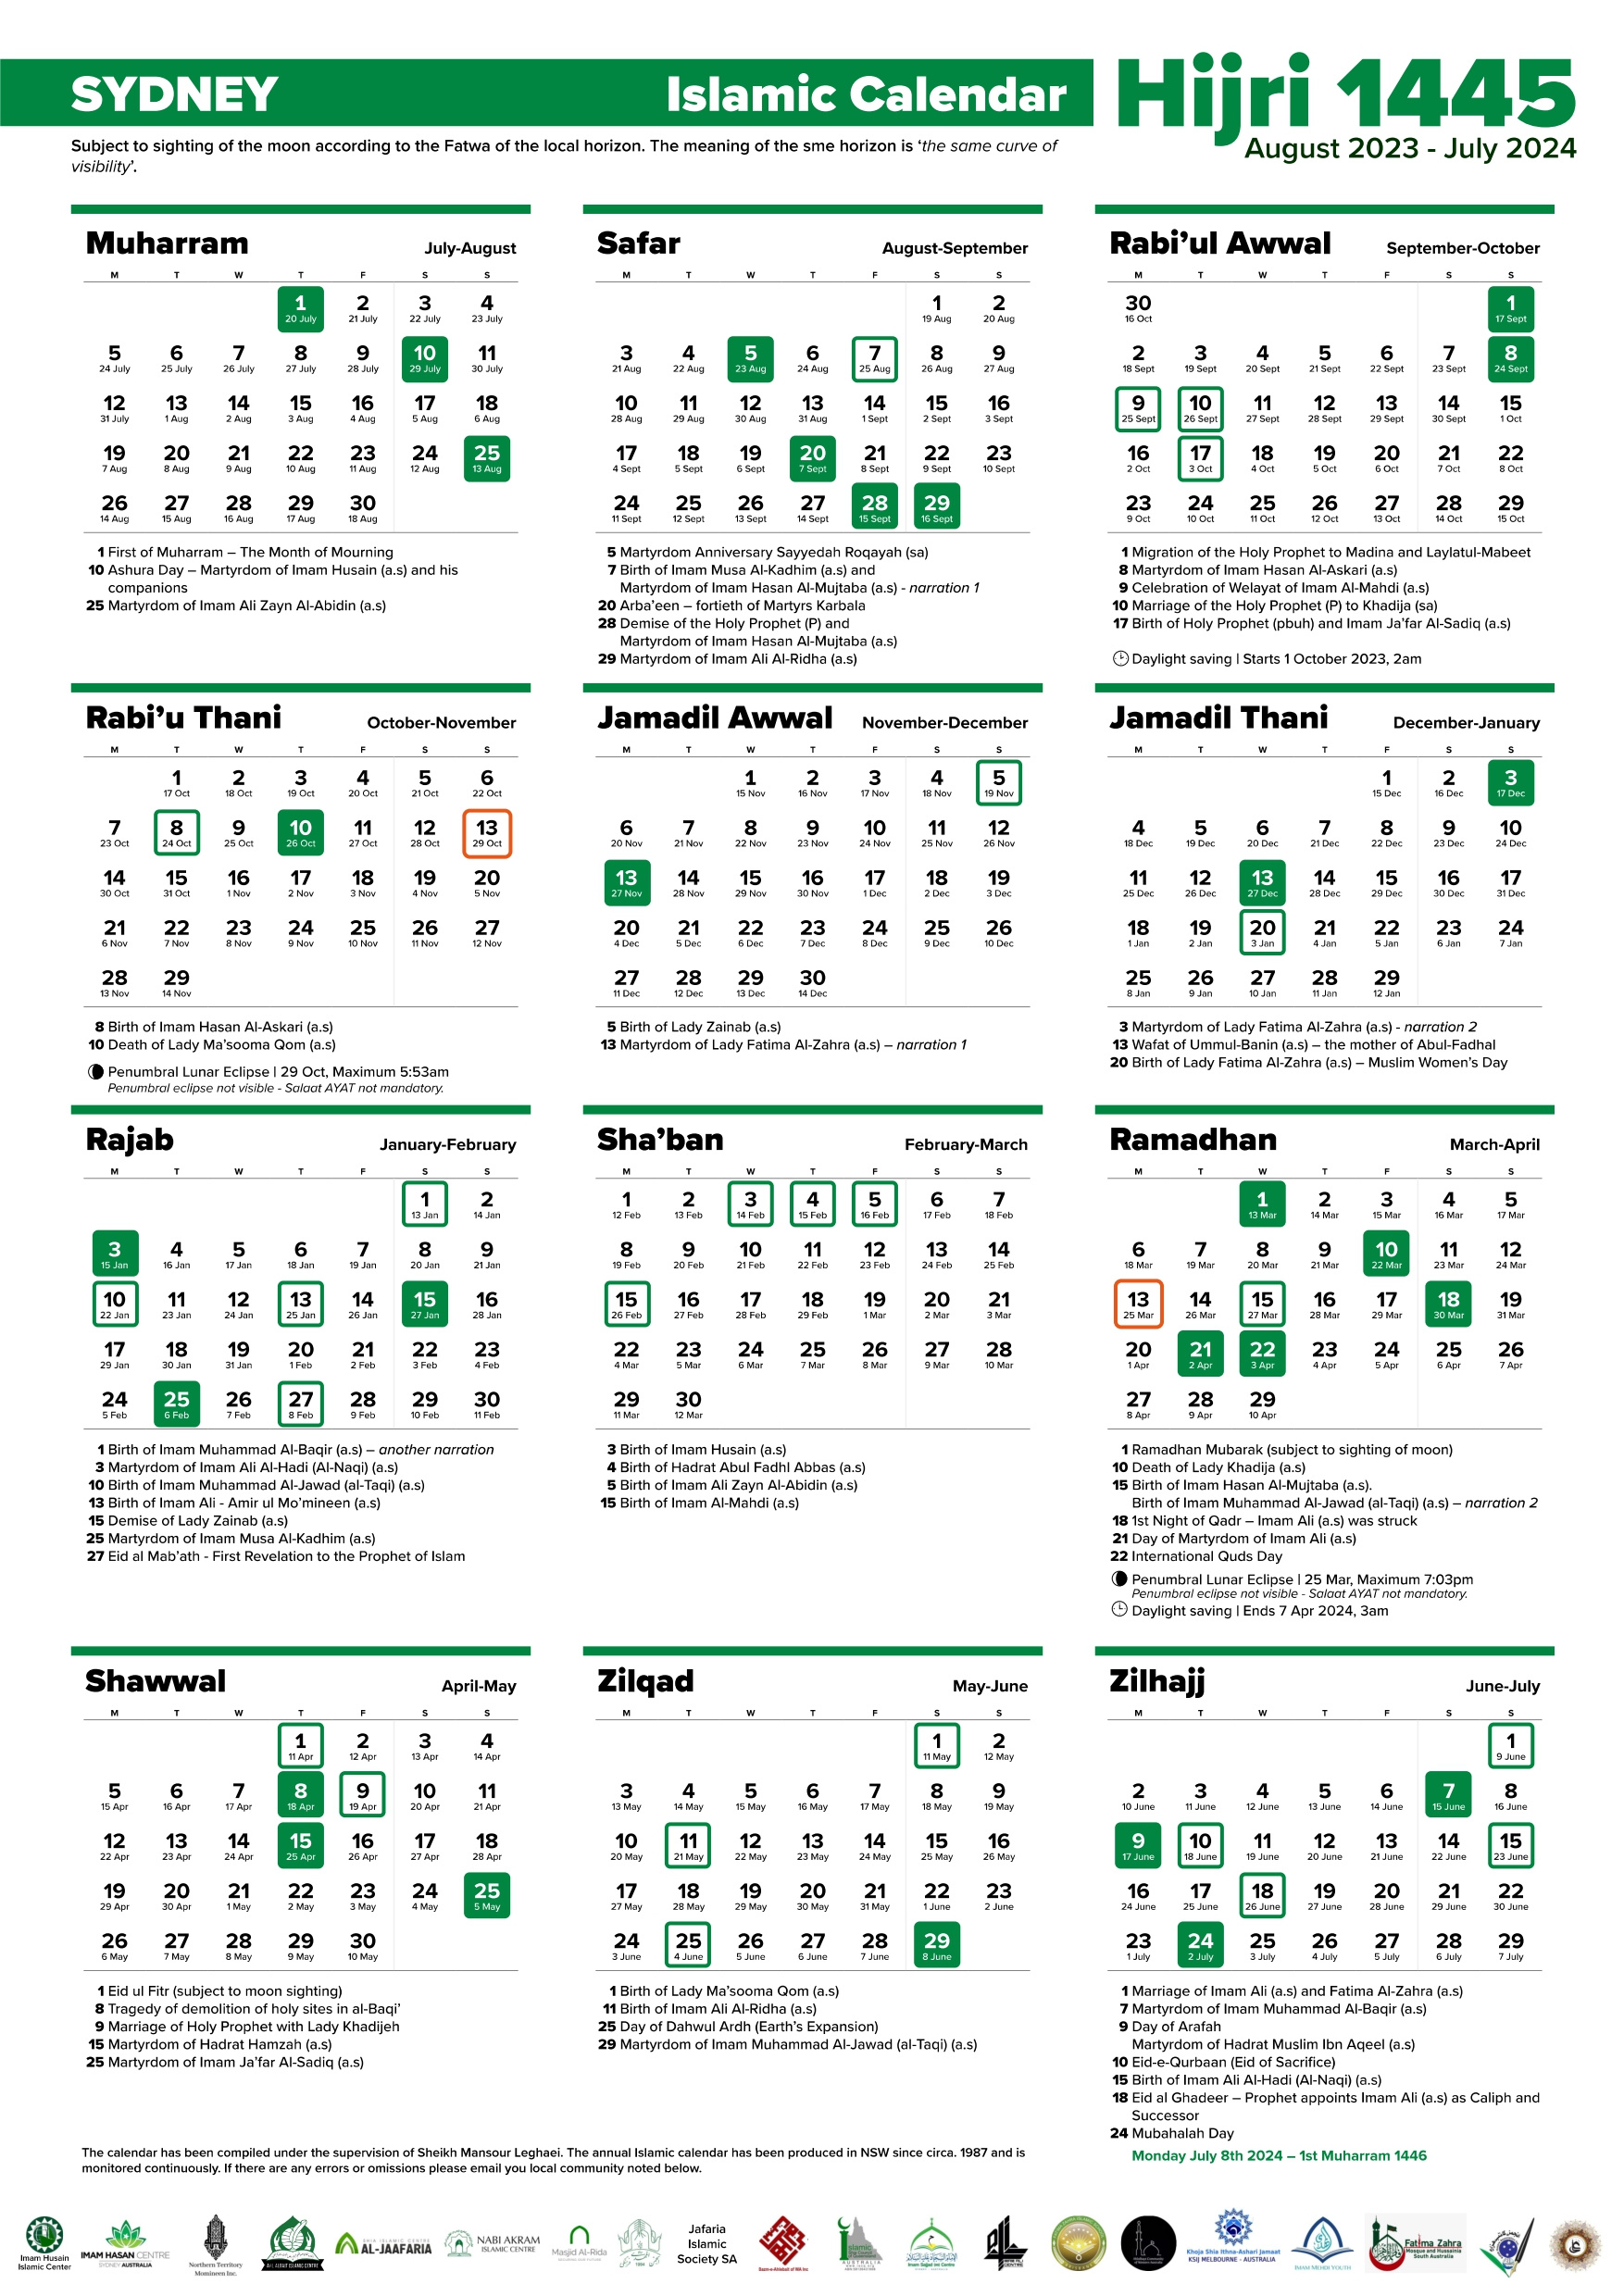 Annual Islamic Calendar 1445 Ah / 2023-2024 Ad – Imam Husain with regard to 16 July 2024 In Islamic Calendar